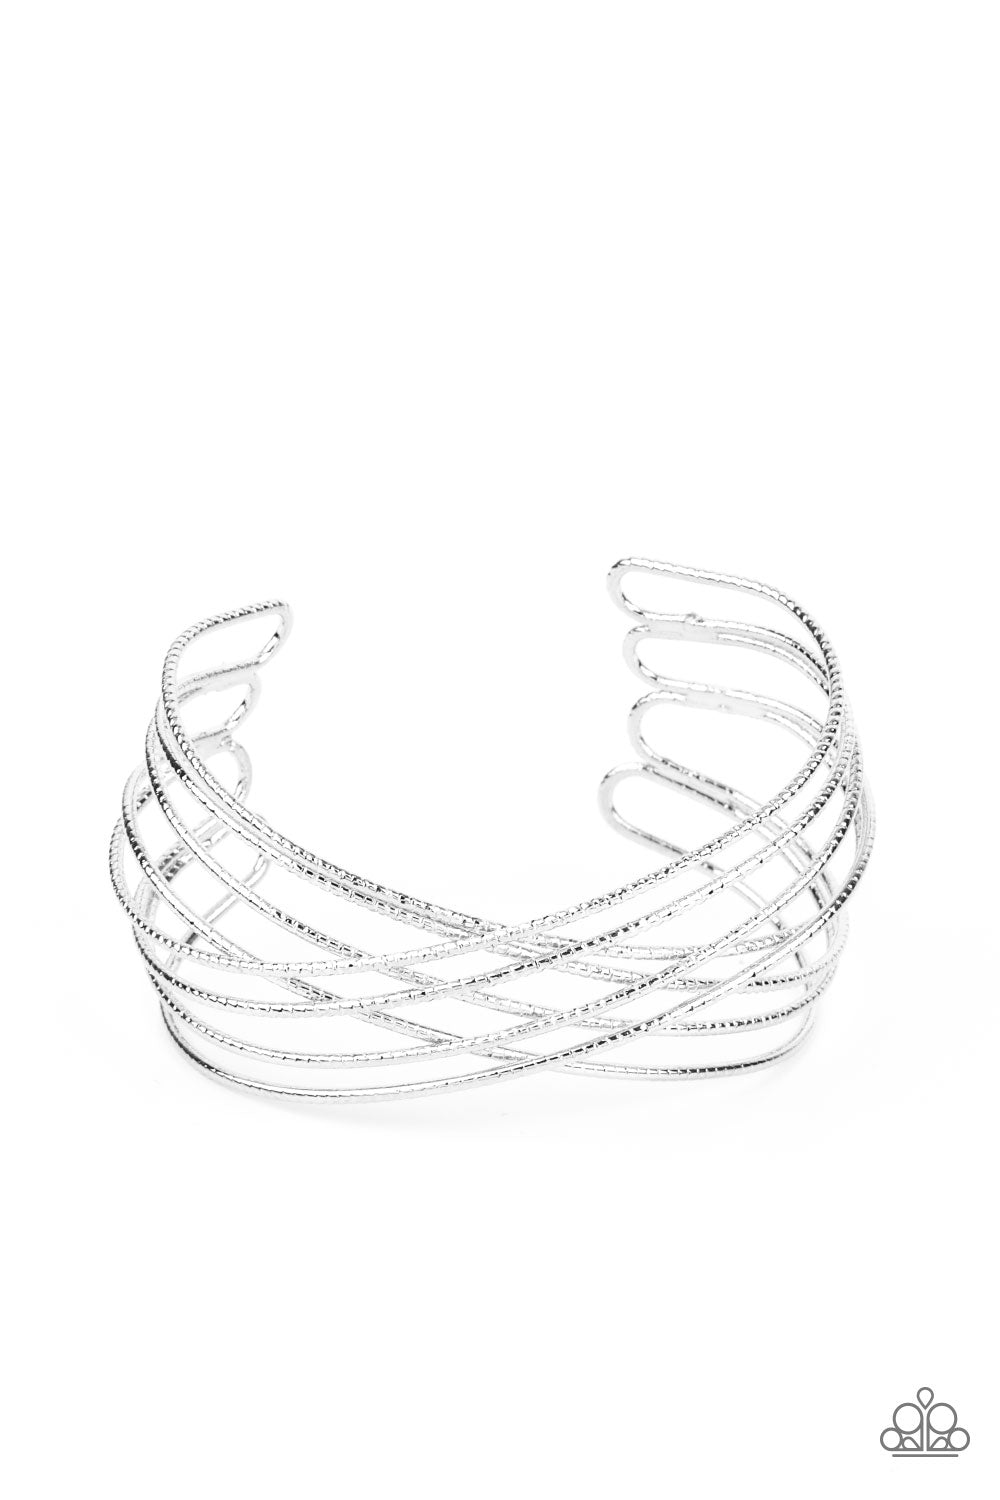 Strike Out Shimmer - Silver Cuff Bracelet - Princess Glam Shop